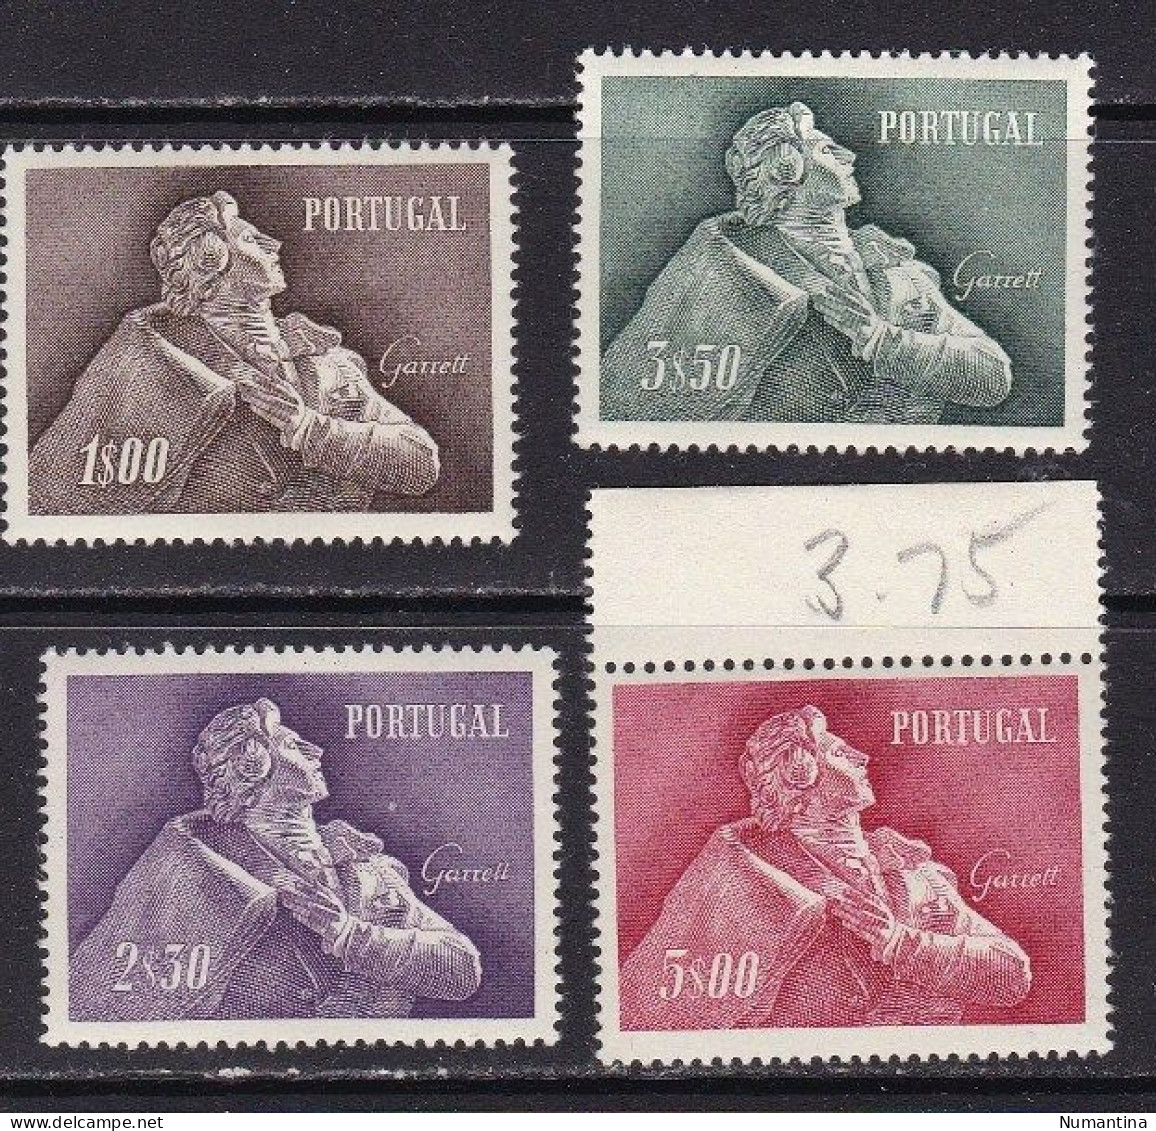 PORTUGAL - 1957 - YVERT 837/840 - Almeida - MNH - Valor Catalogo 170 € - Nuevos